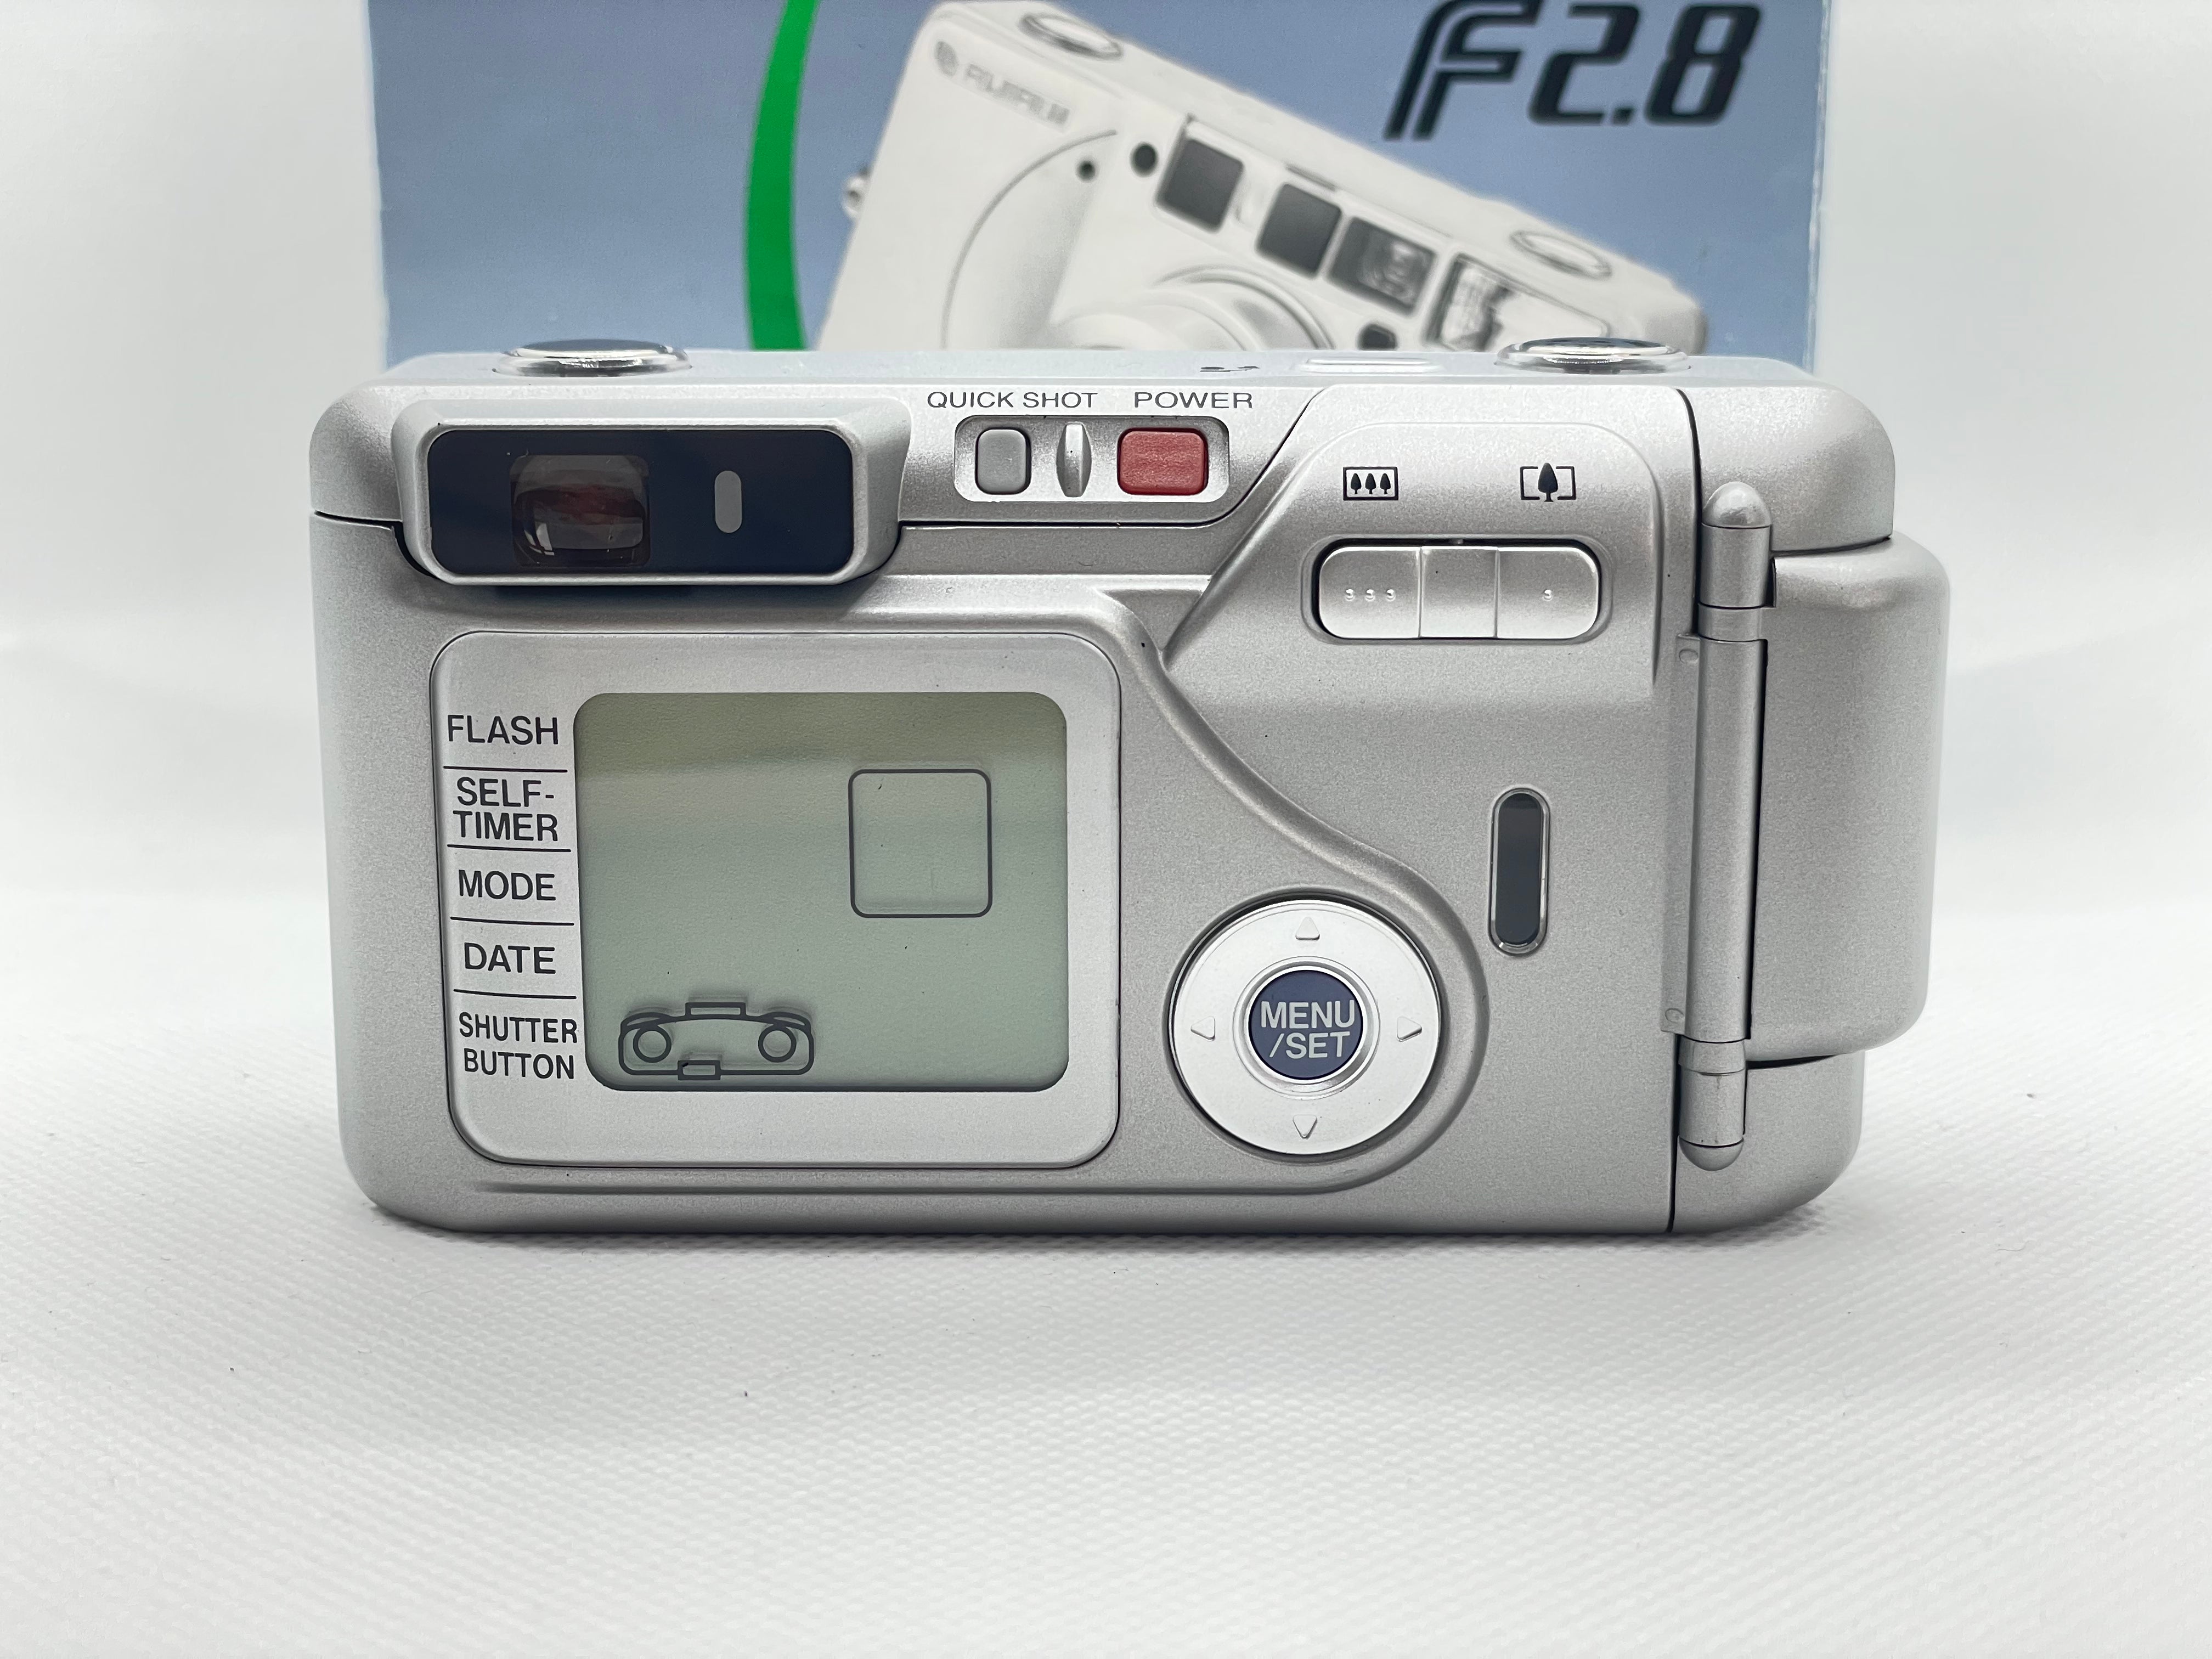 Fujifilm ZoomDate F2.8